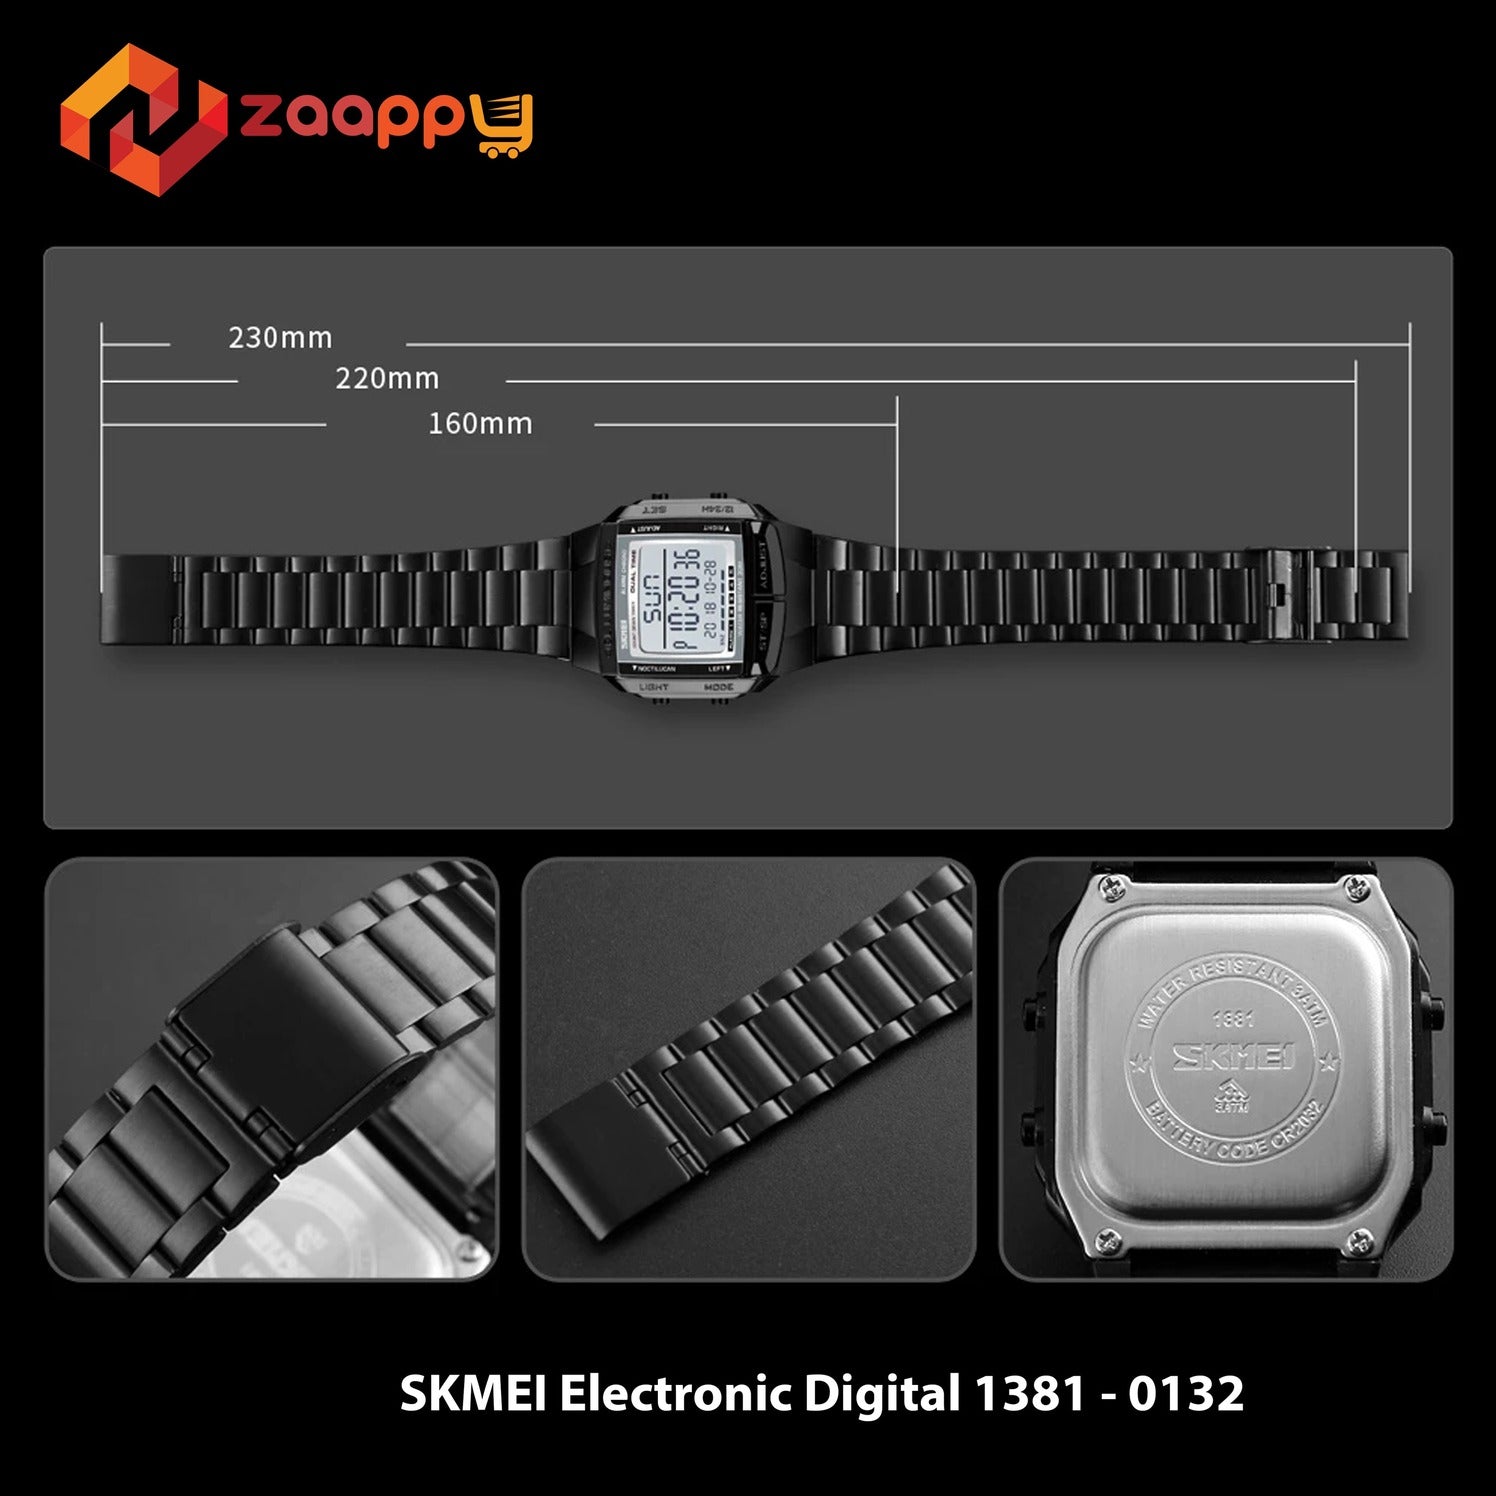 SKMEI Electronic Digital Watch 1381 For Men | Multifunctional Chronographic Watch zaappy